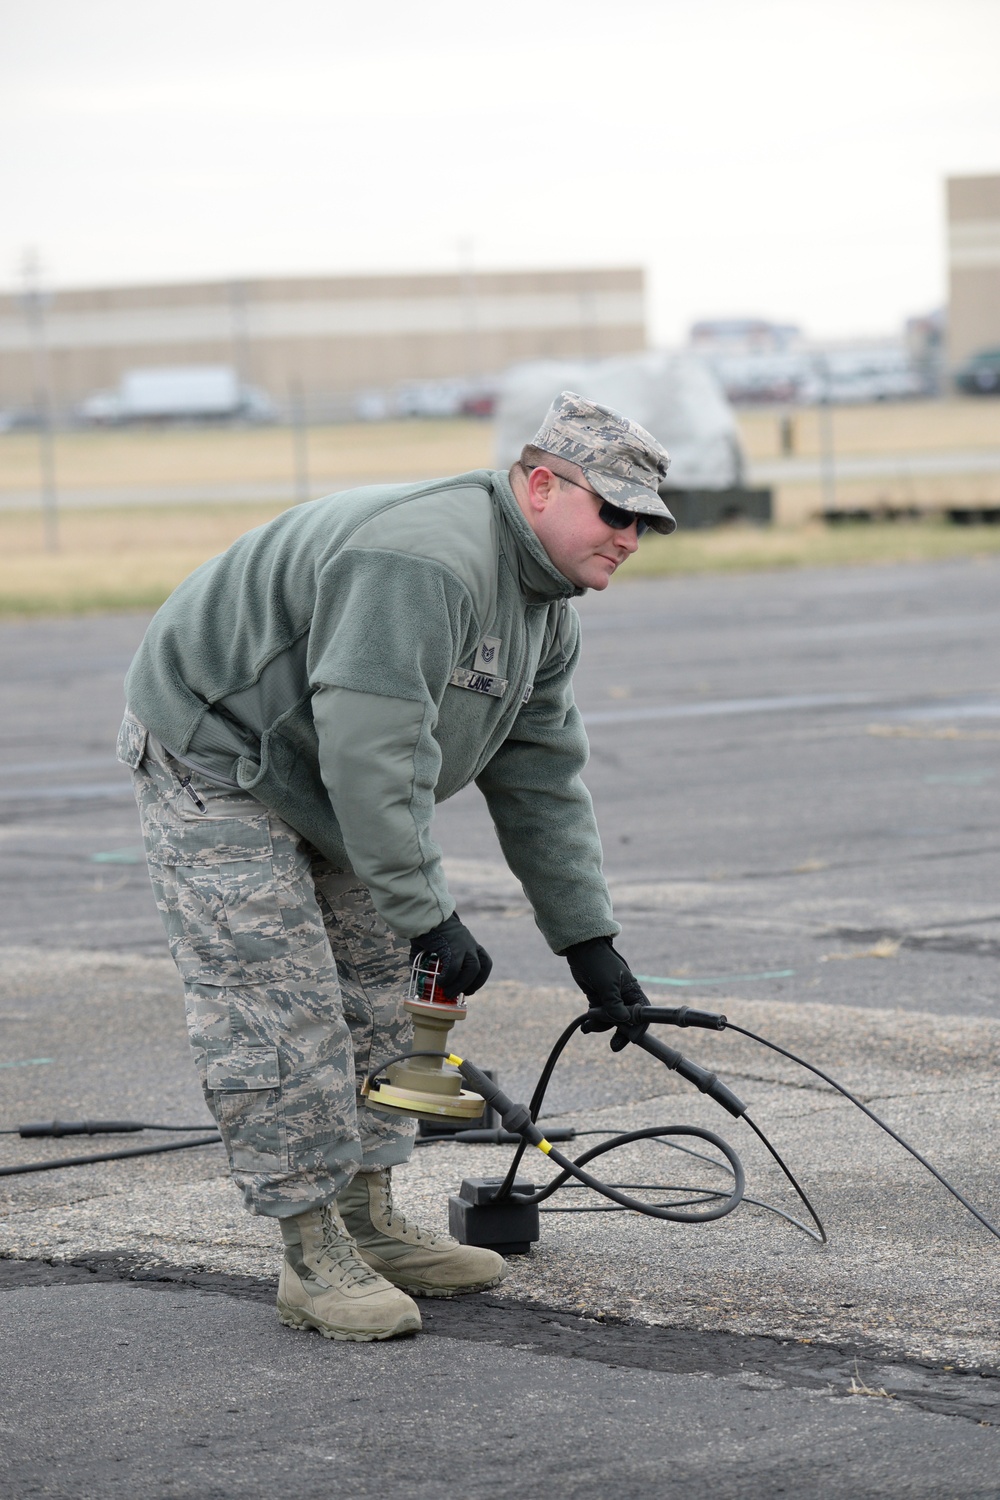 Airfield lighting training is happening in Fargo, ND